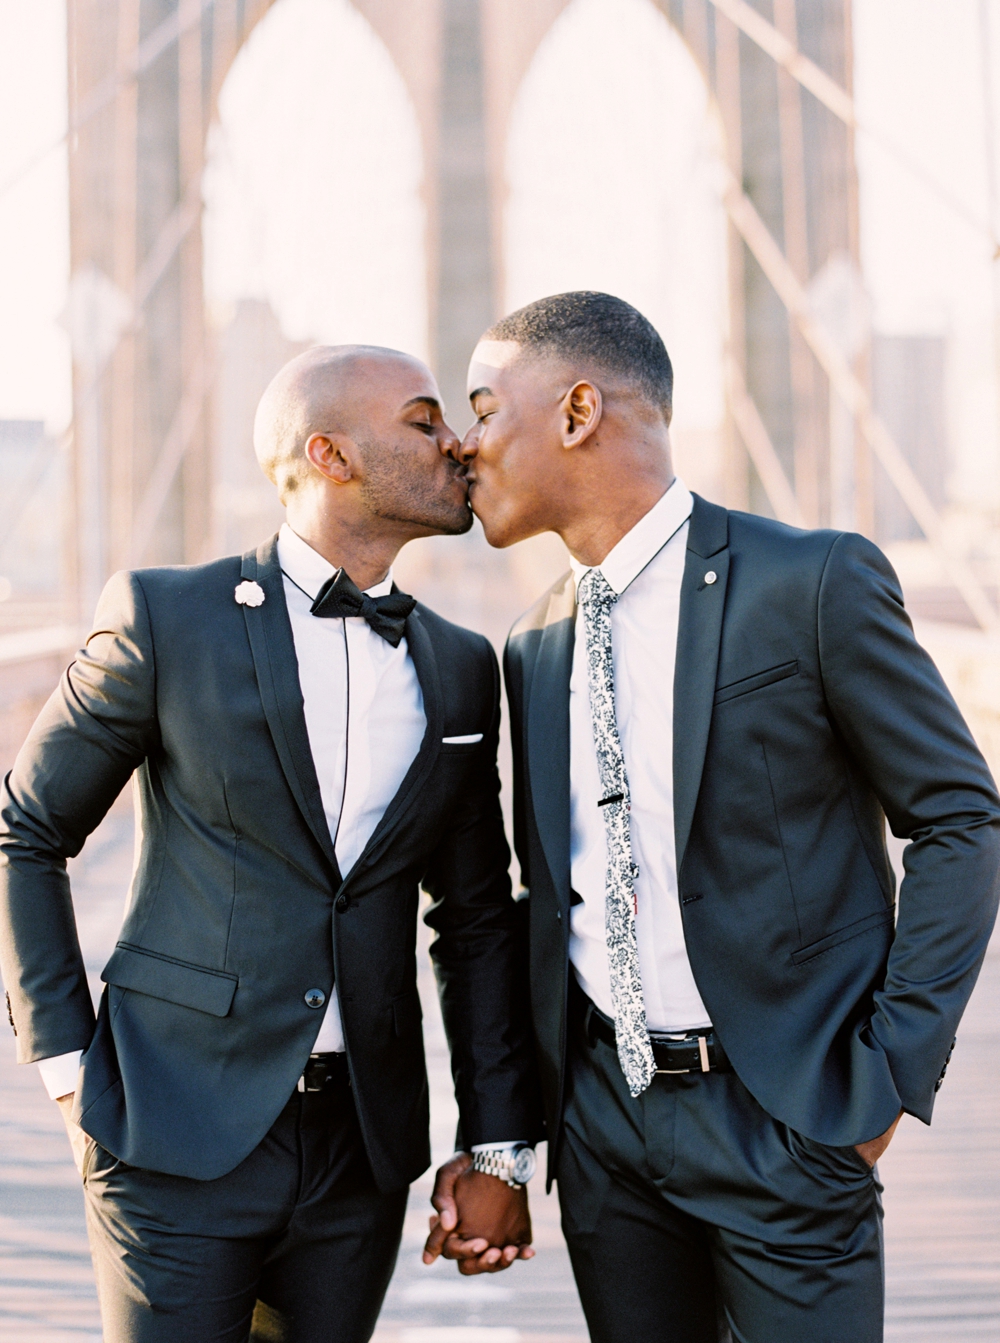 NYC Photographer | Calgary Wedding Photographers | Brooklyn Engagement Session | Gay Couple | New York City Engagement Photos